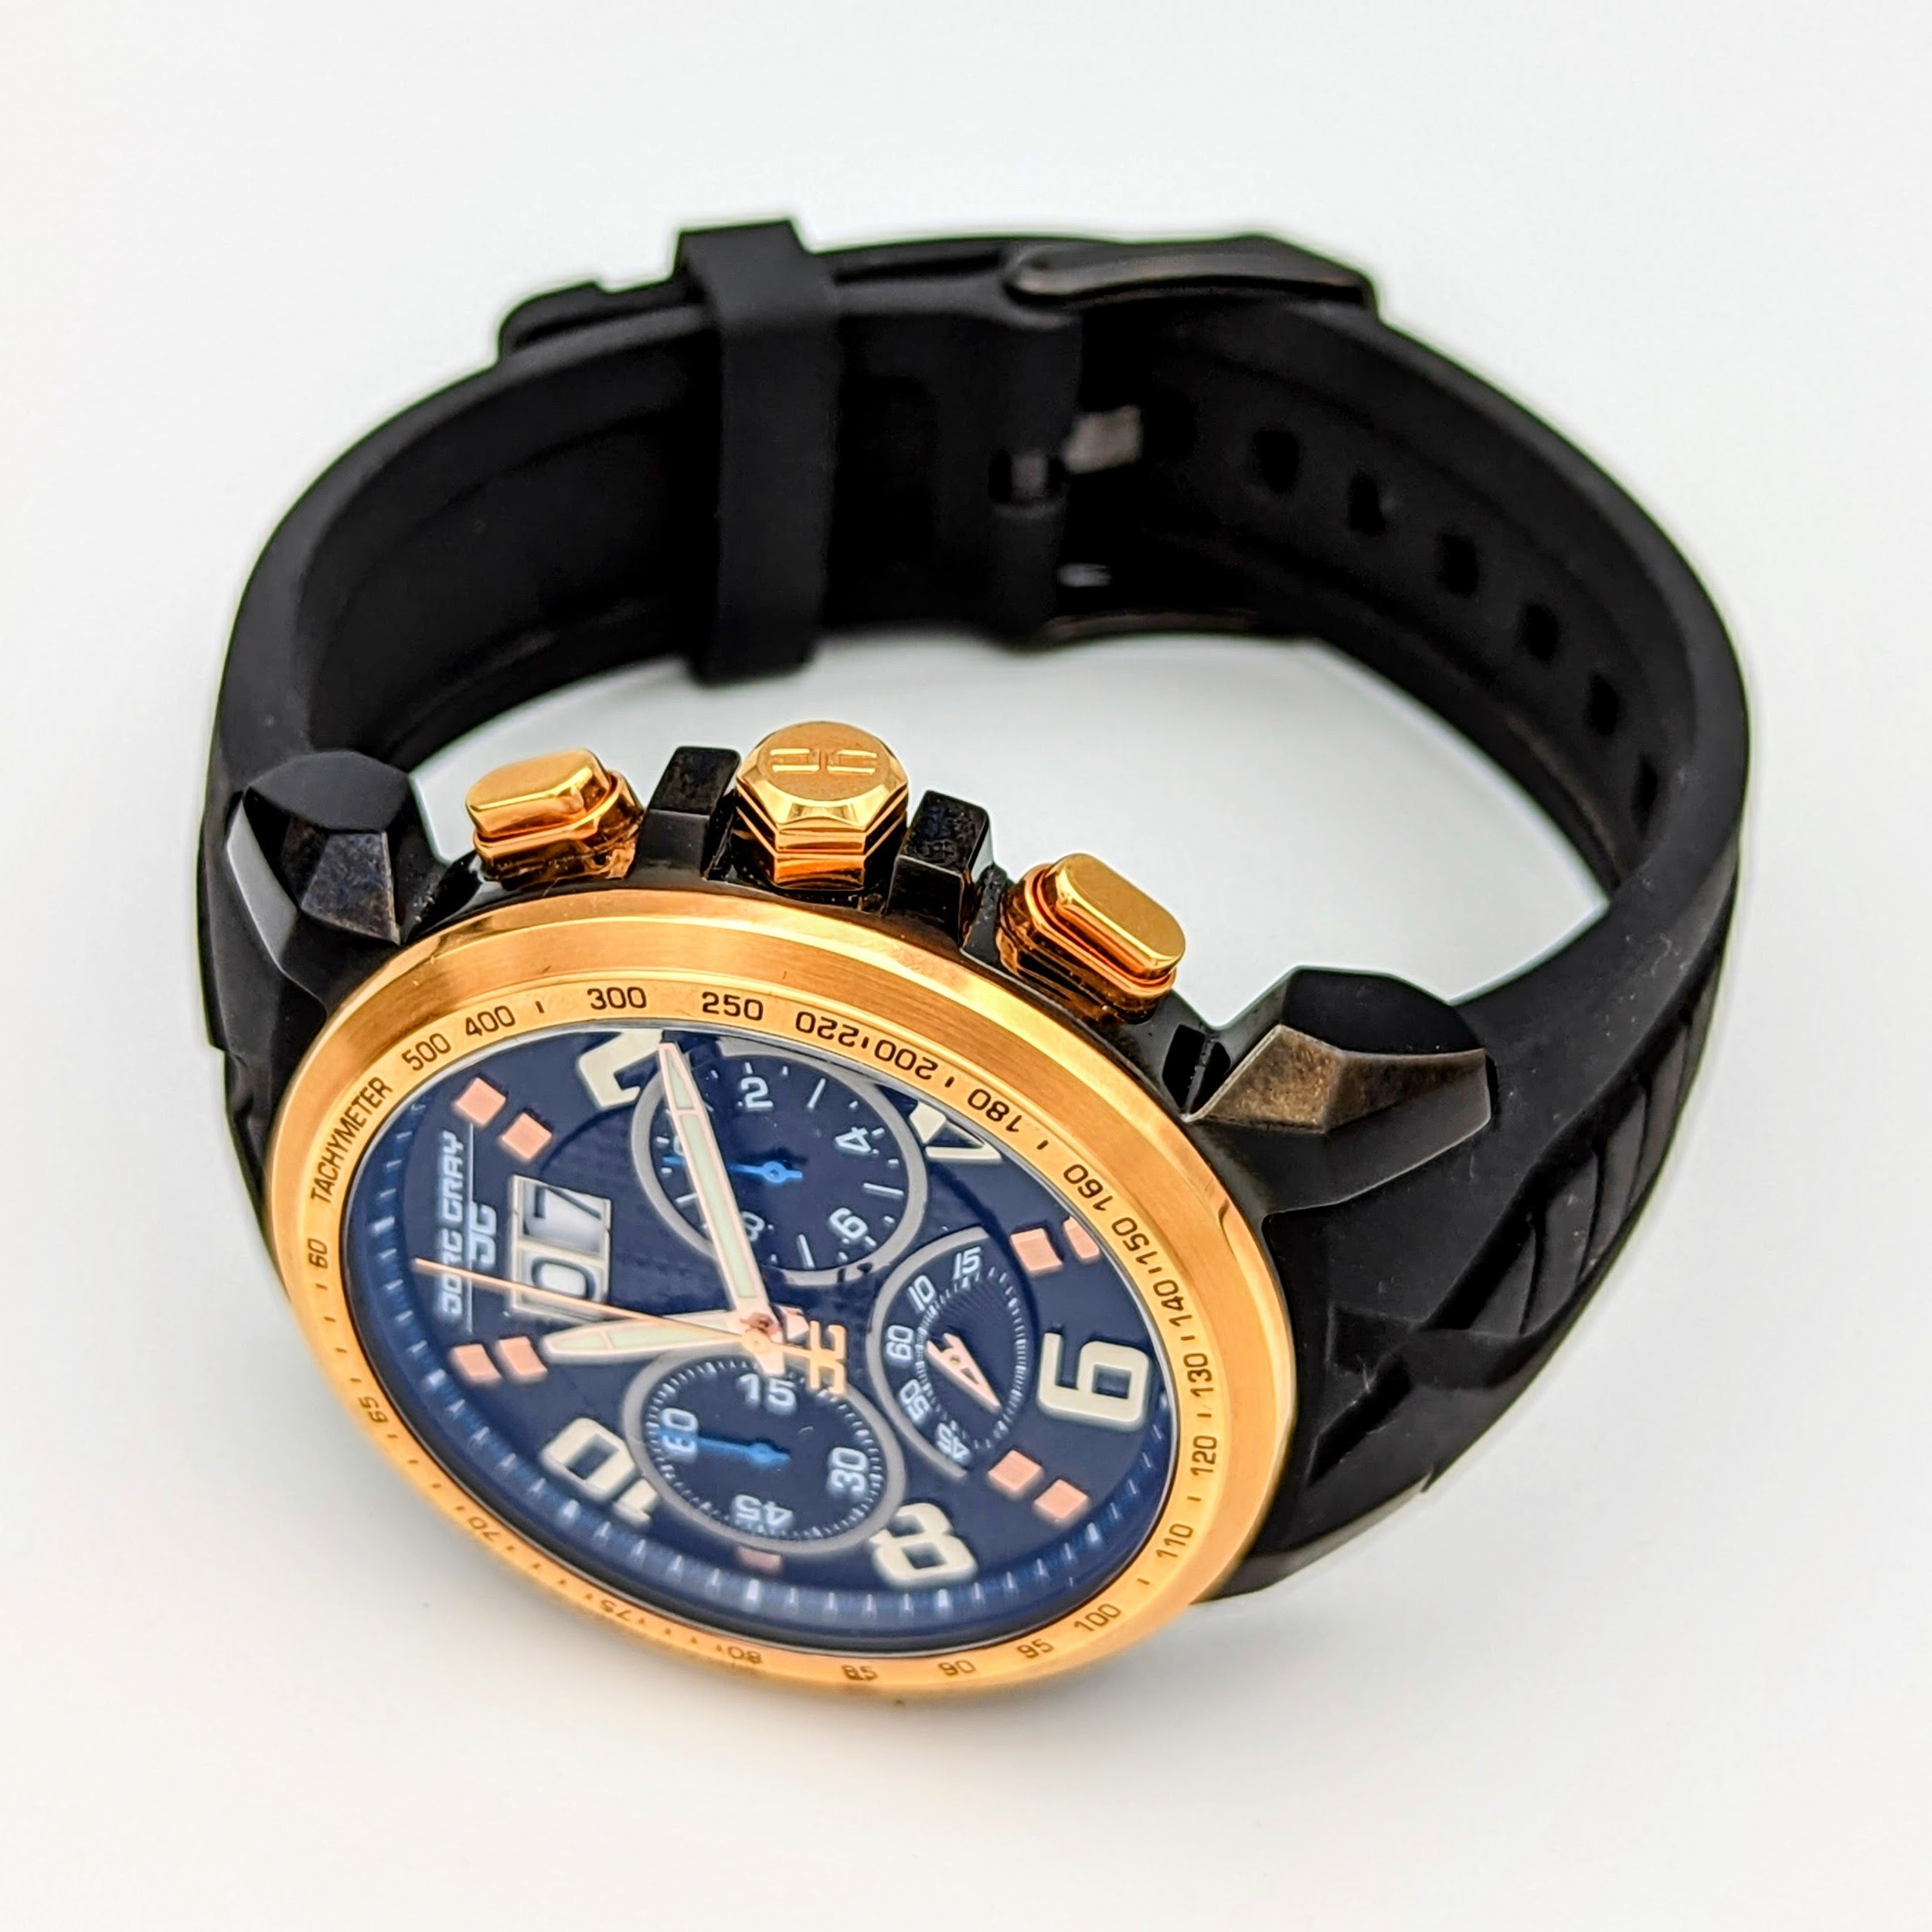 JORG GRAY Chronograph Watch JG5600 Series Two-Tone S.S. Case 47.5mm Wristwatch